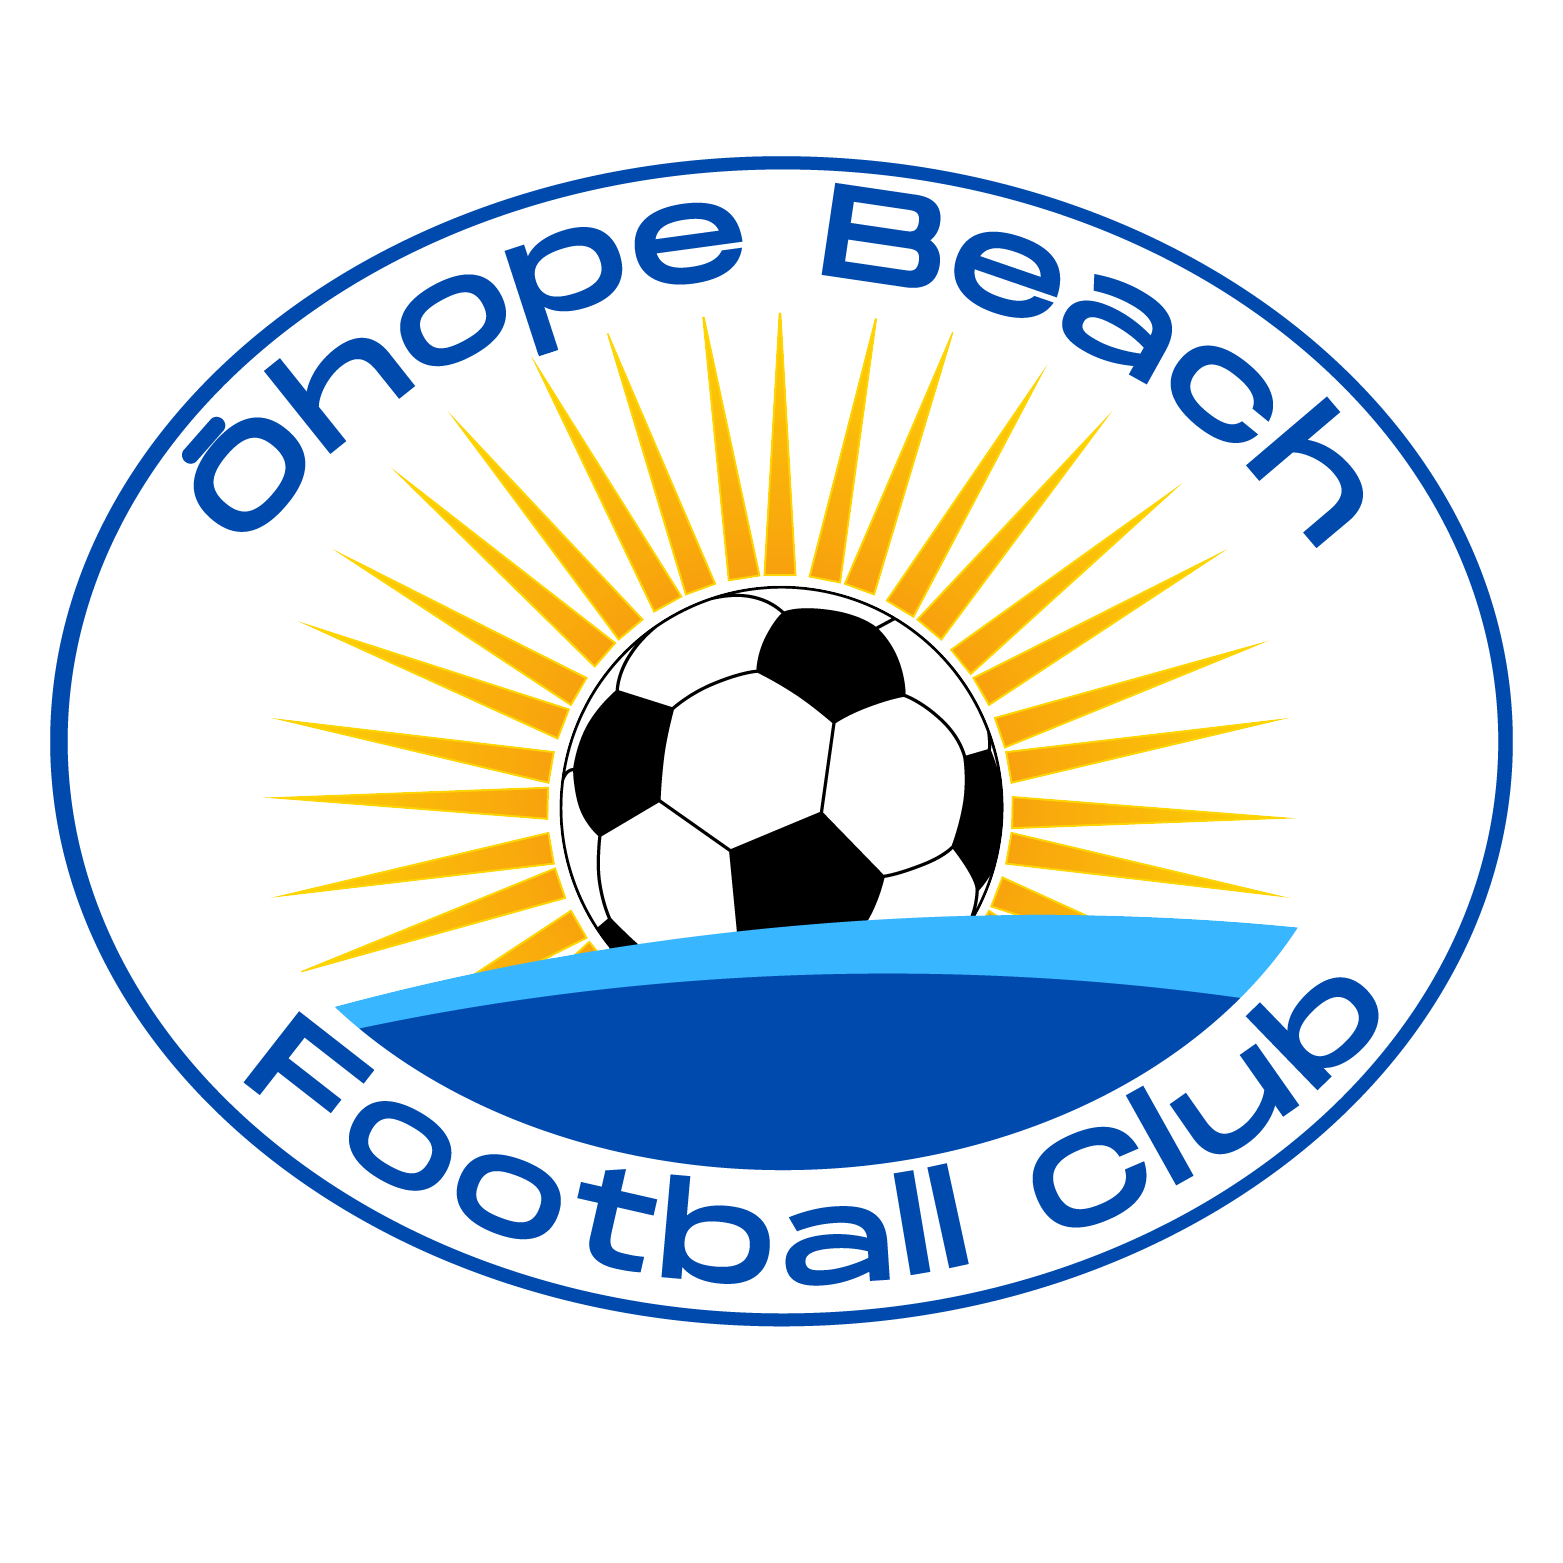 Ohope Beach Football Club